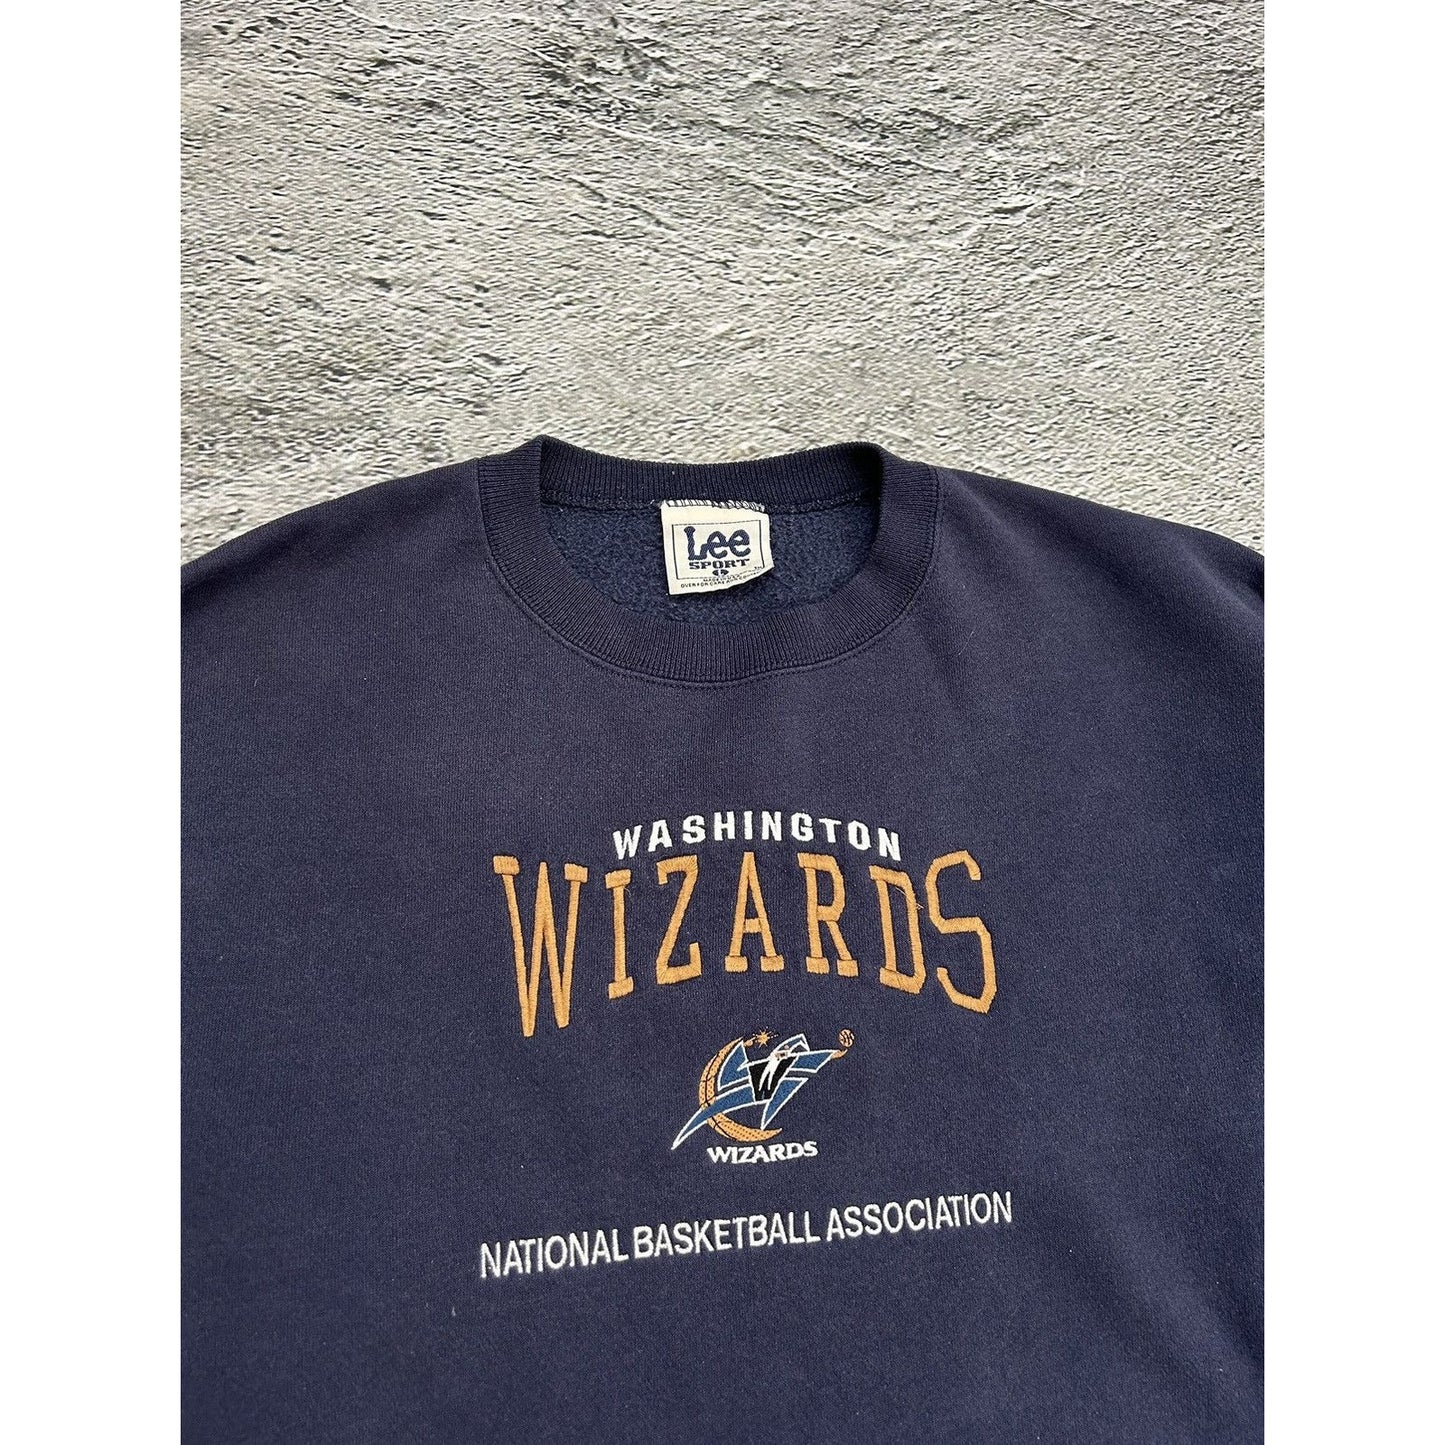 90s Vintage Lee Sport Washington Wizards NBA Sweatshirt